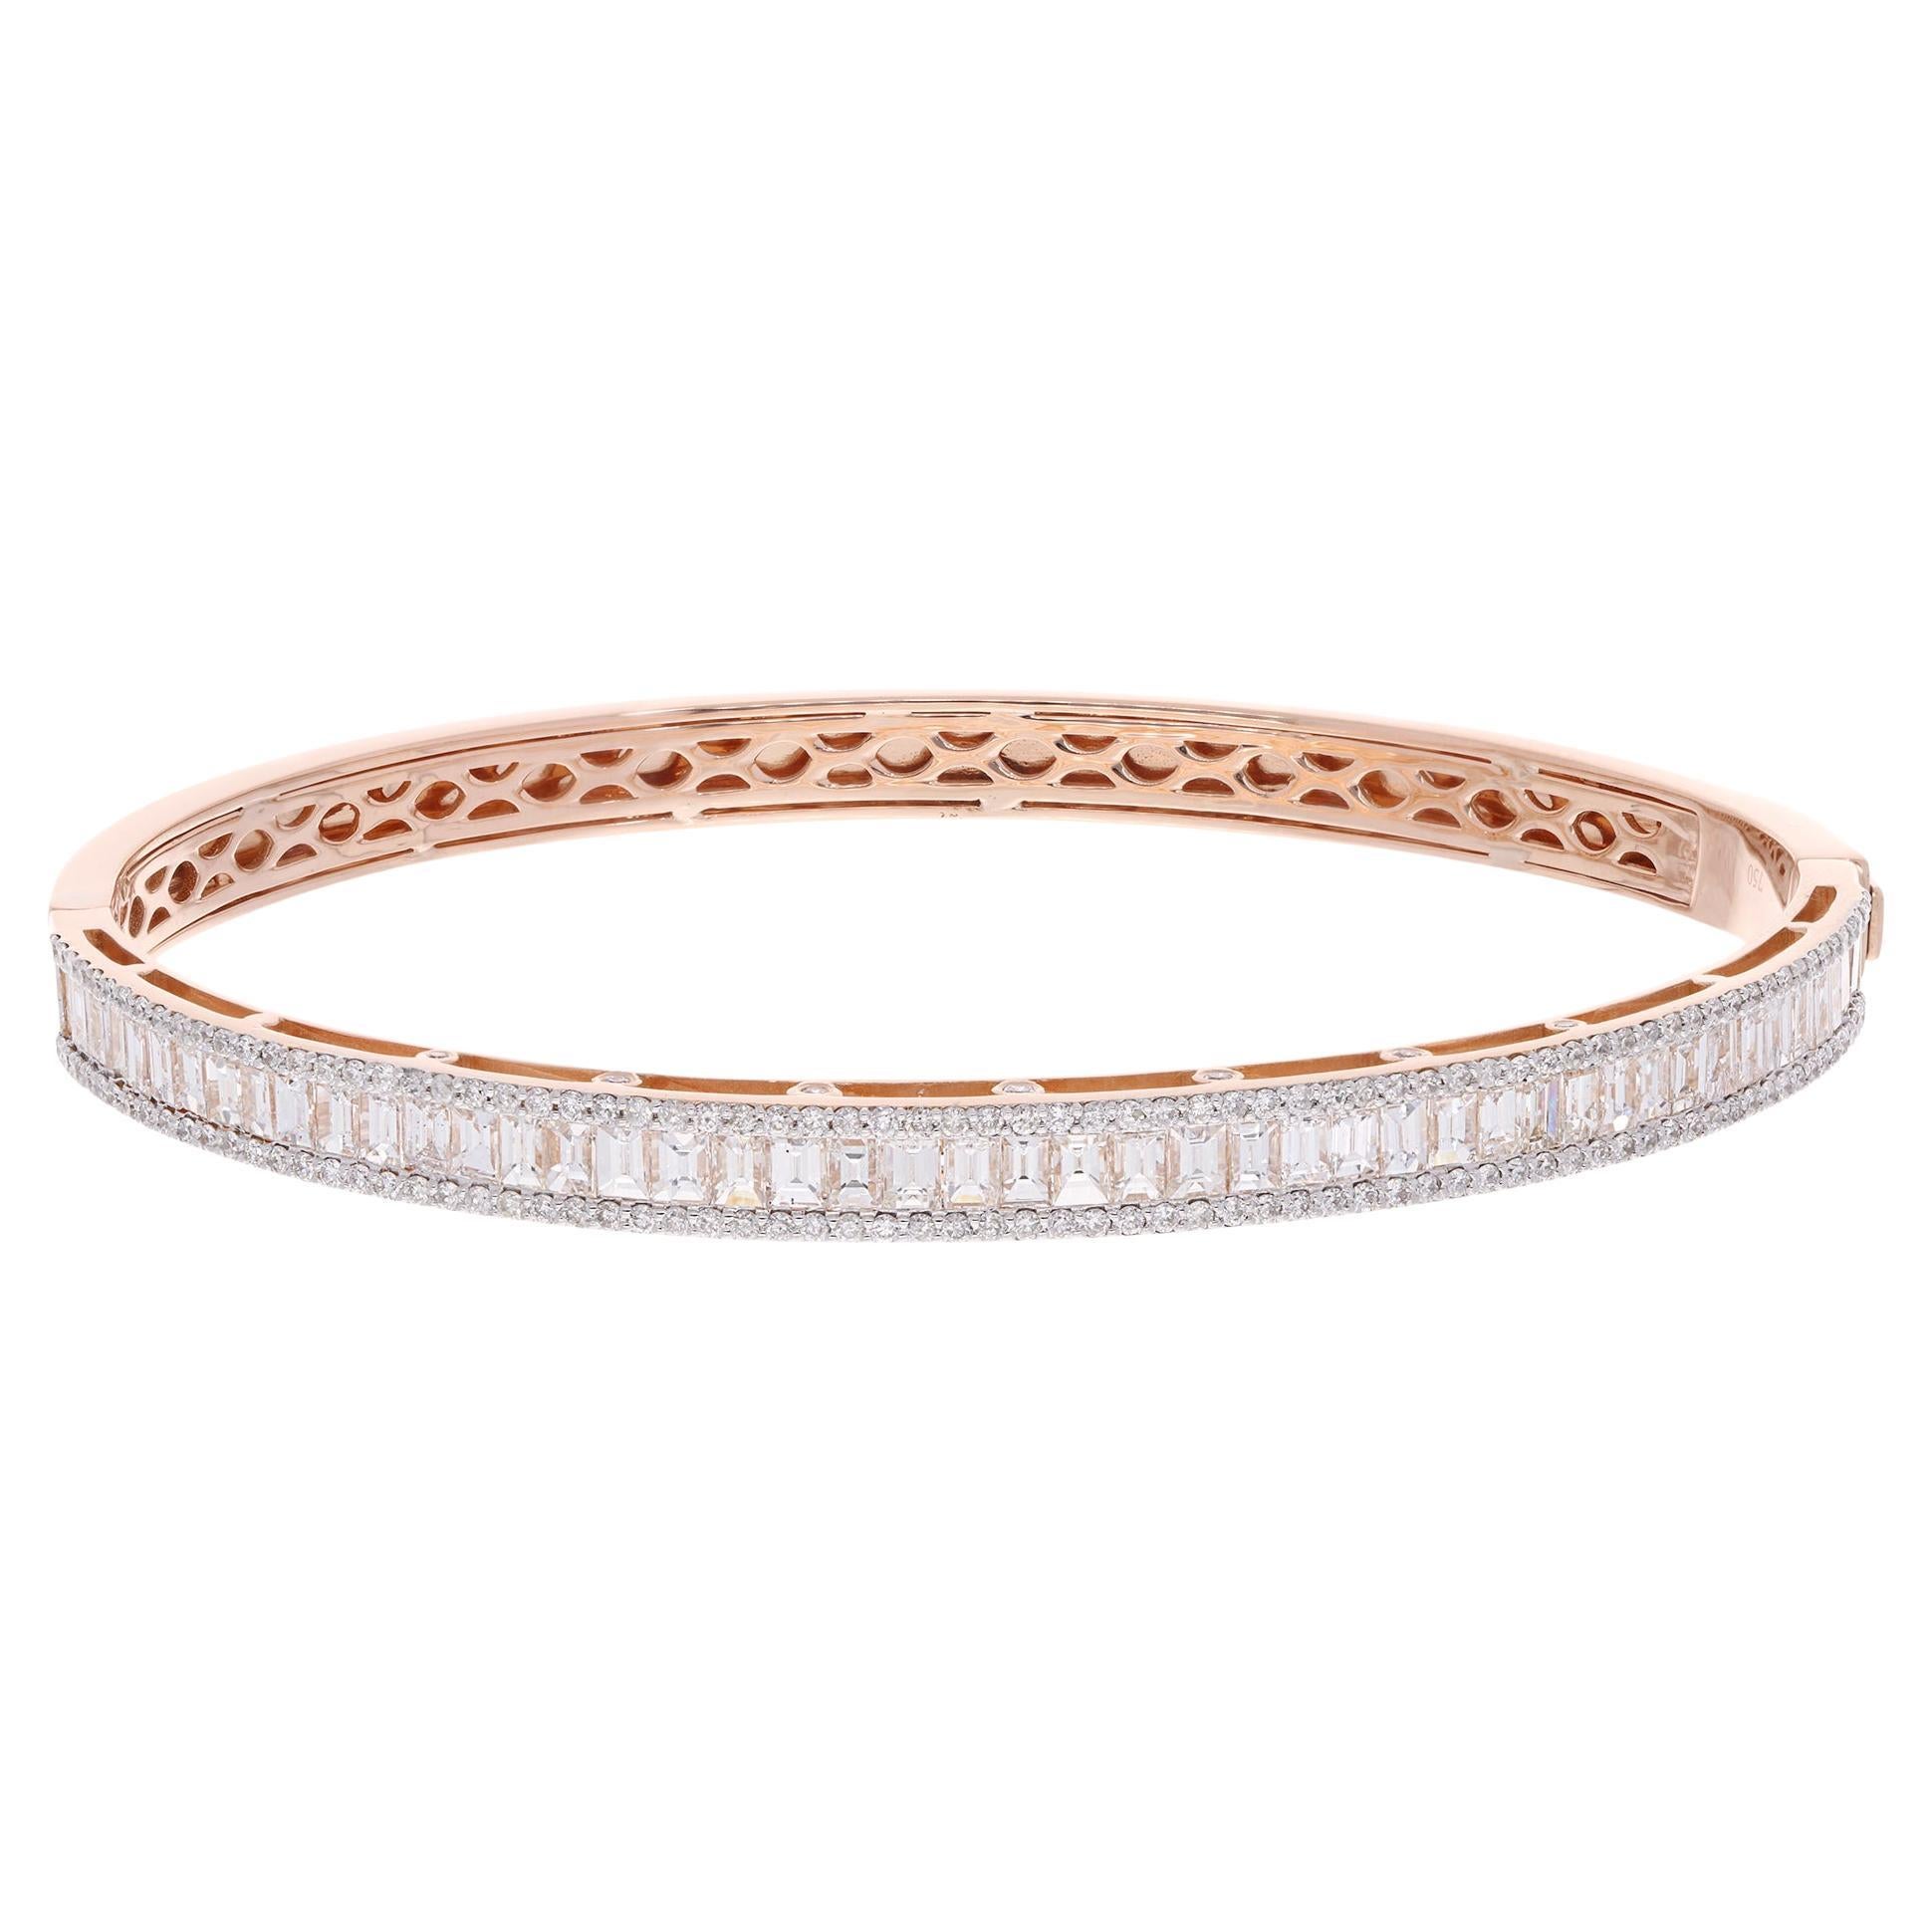 4.90 Carat Round & Baguette Shape Diamond Bracelet 18 Karat Rose Gold Jewelry